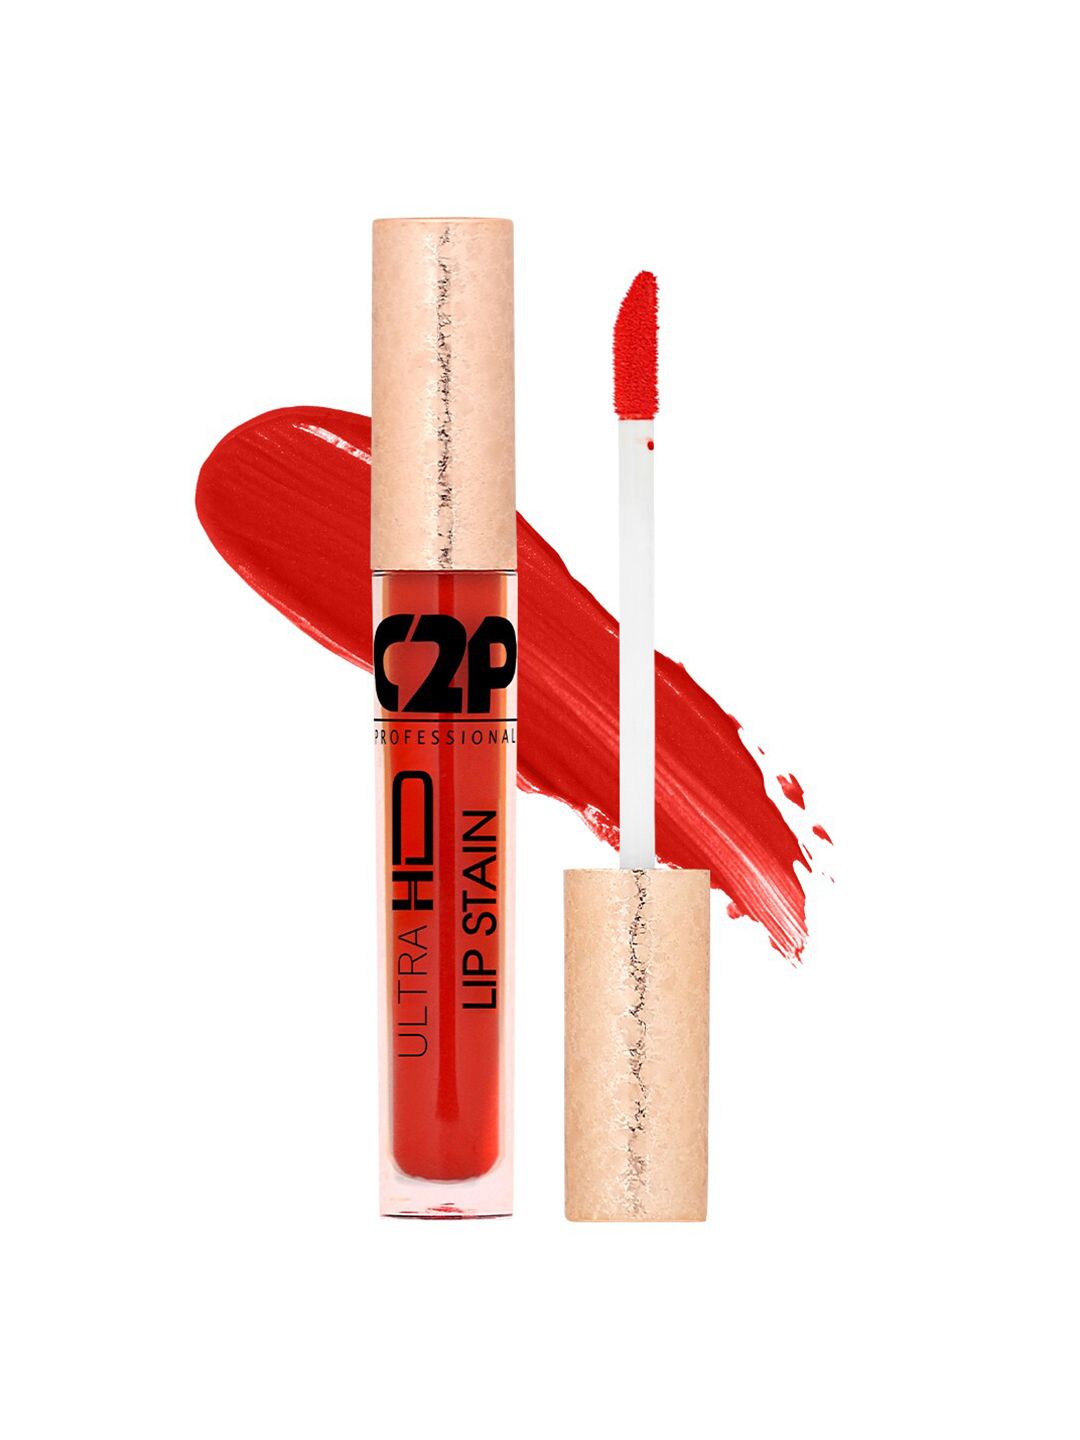 C2P PROFESSIONAL MAKEUP Lip Stain Liquid Lipstick - Warm Blood 08 5ML Price in India